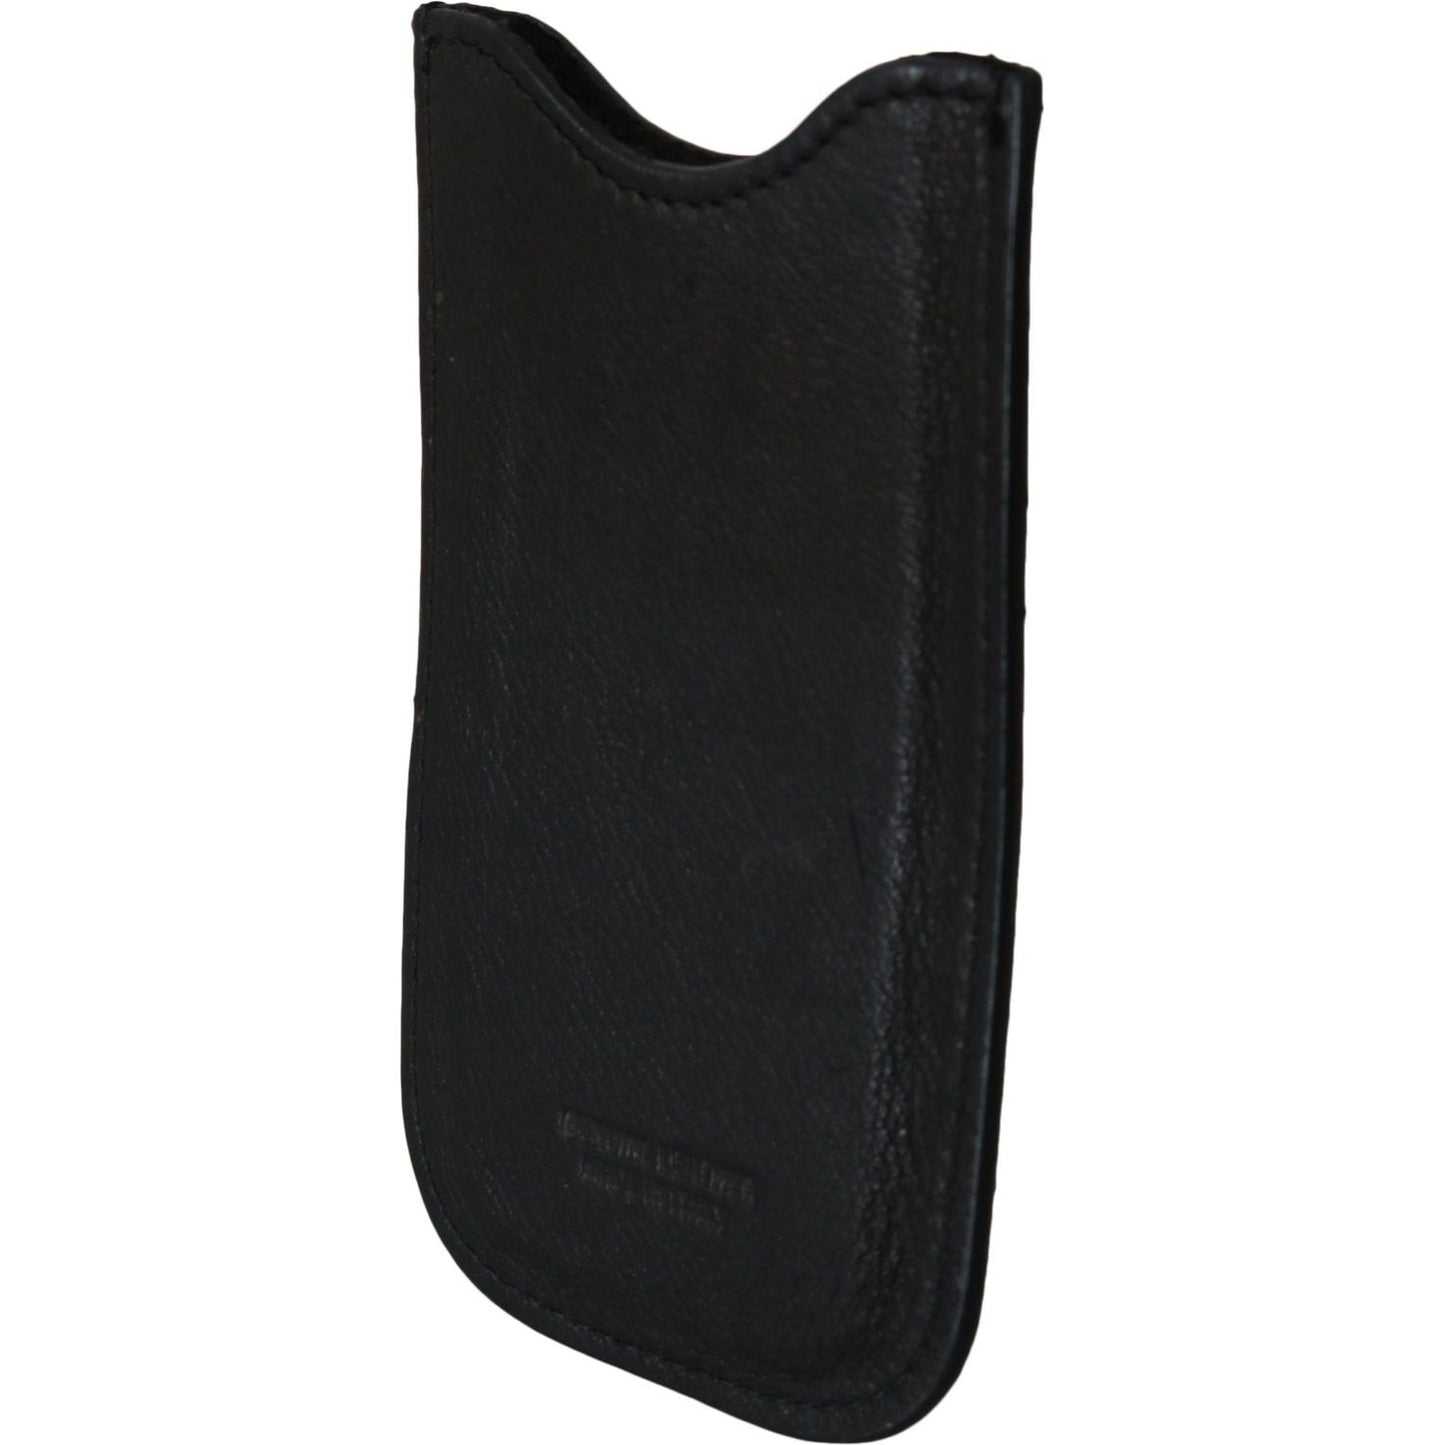 John Galliano Elegant Black Genuine Leather Men's Wallet black-leather-multifunctional-men-id-bill-card-holder-wallet Wallet IMG_1774-scaled-eb1260ef-4e8.jpg